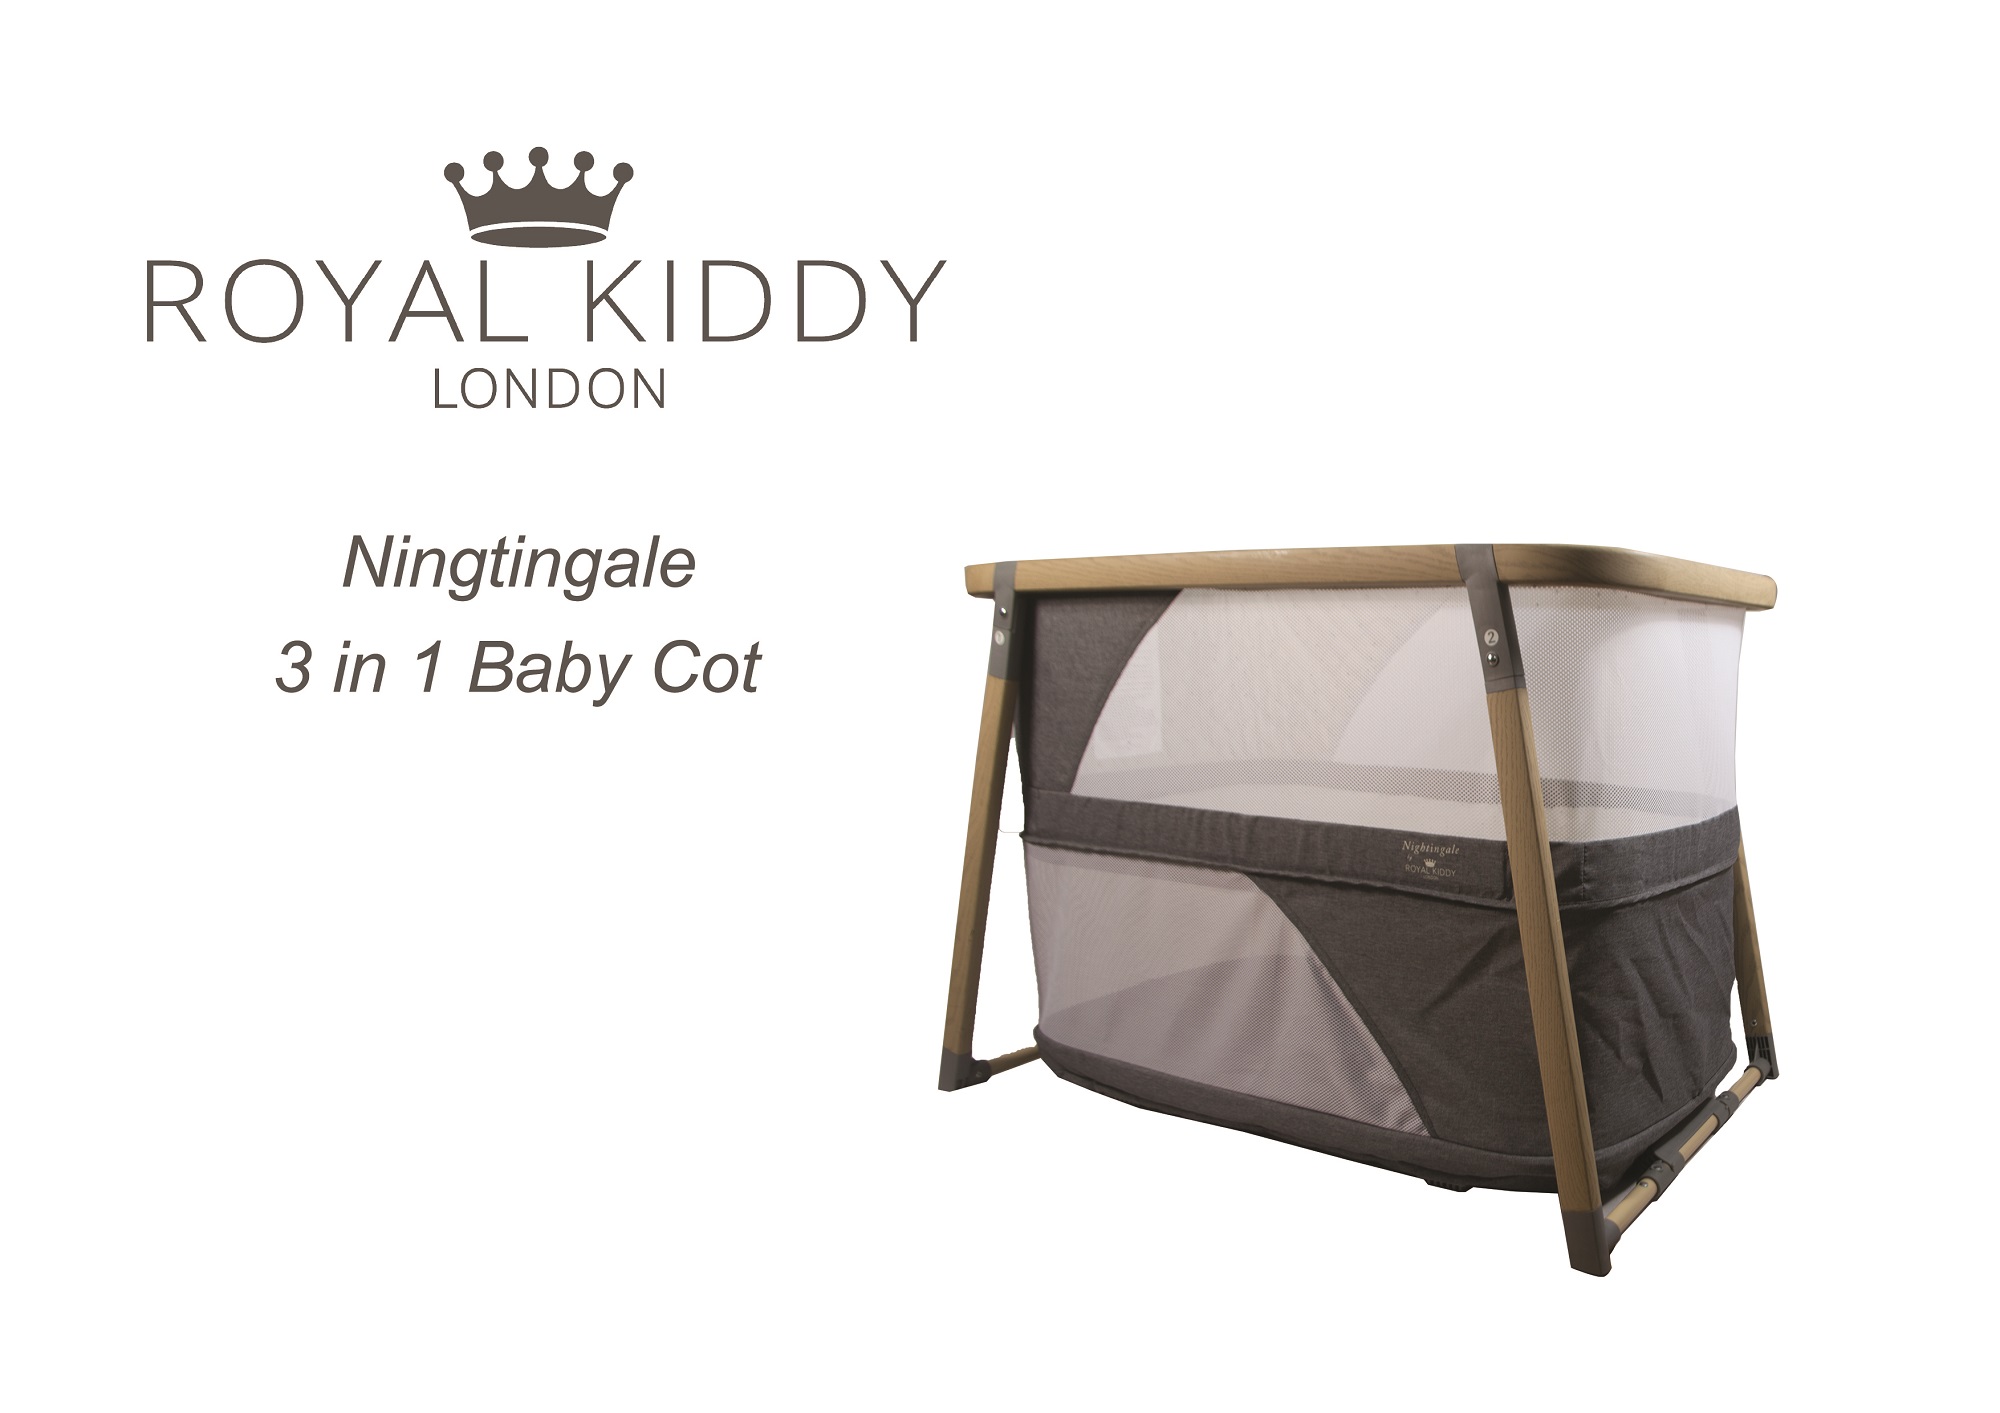 Royal Kiddy London 3 in 1 Nightingale Baby Cot Playpen (GREY)